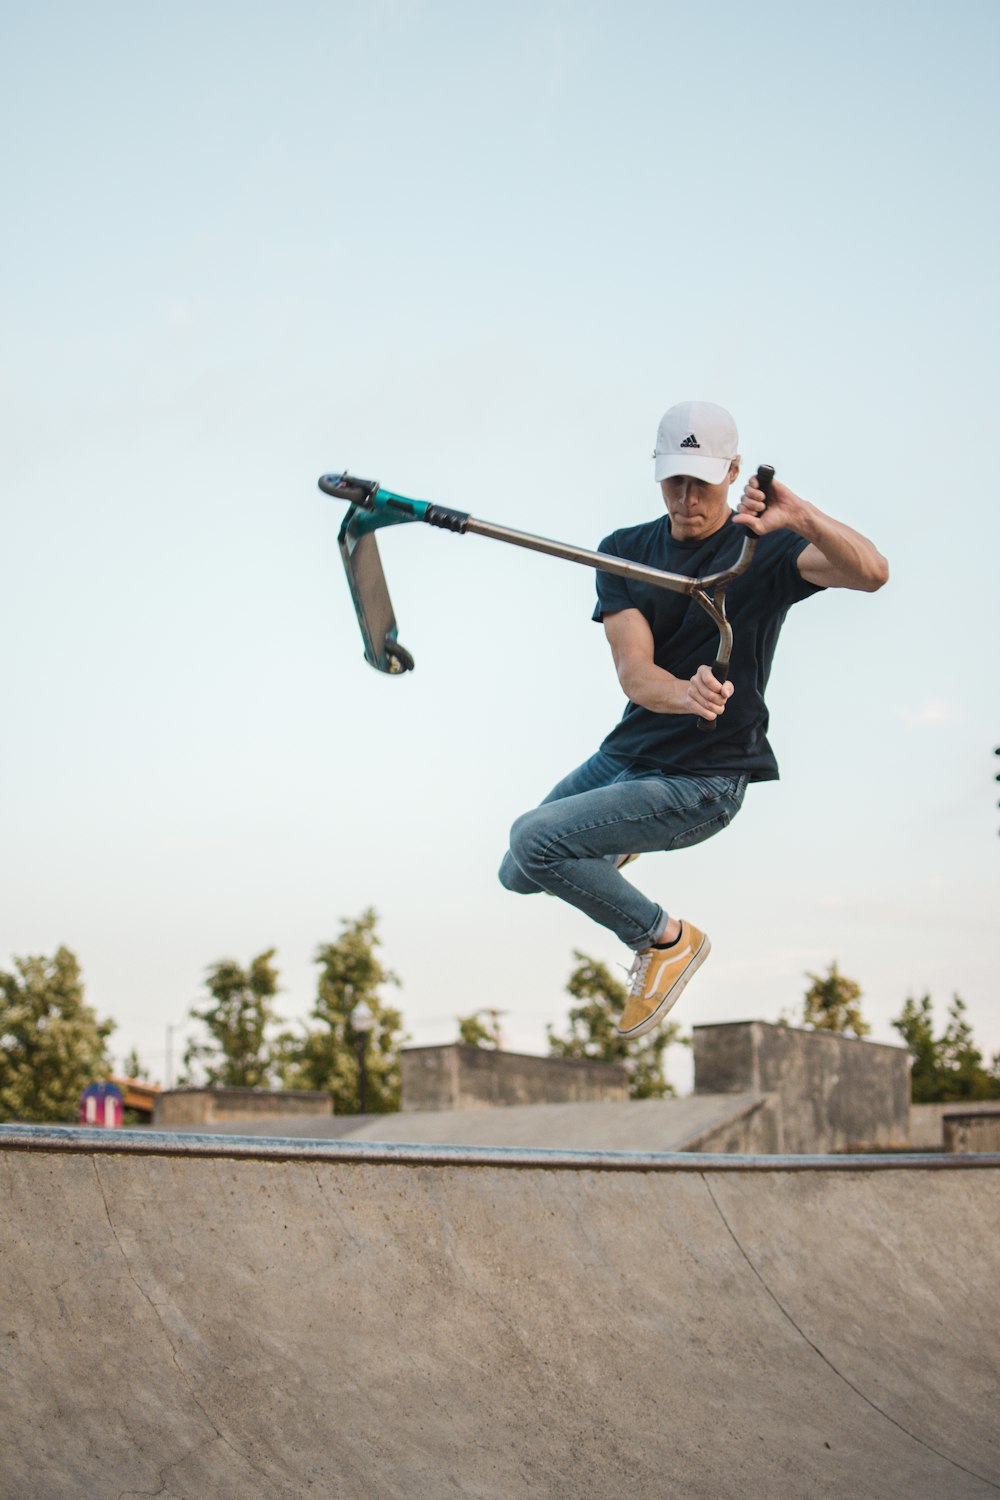 man wearing black crew-neck shirt doing trick on kick scooter